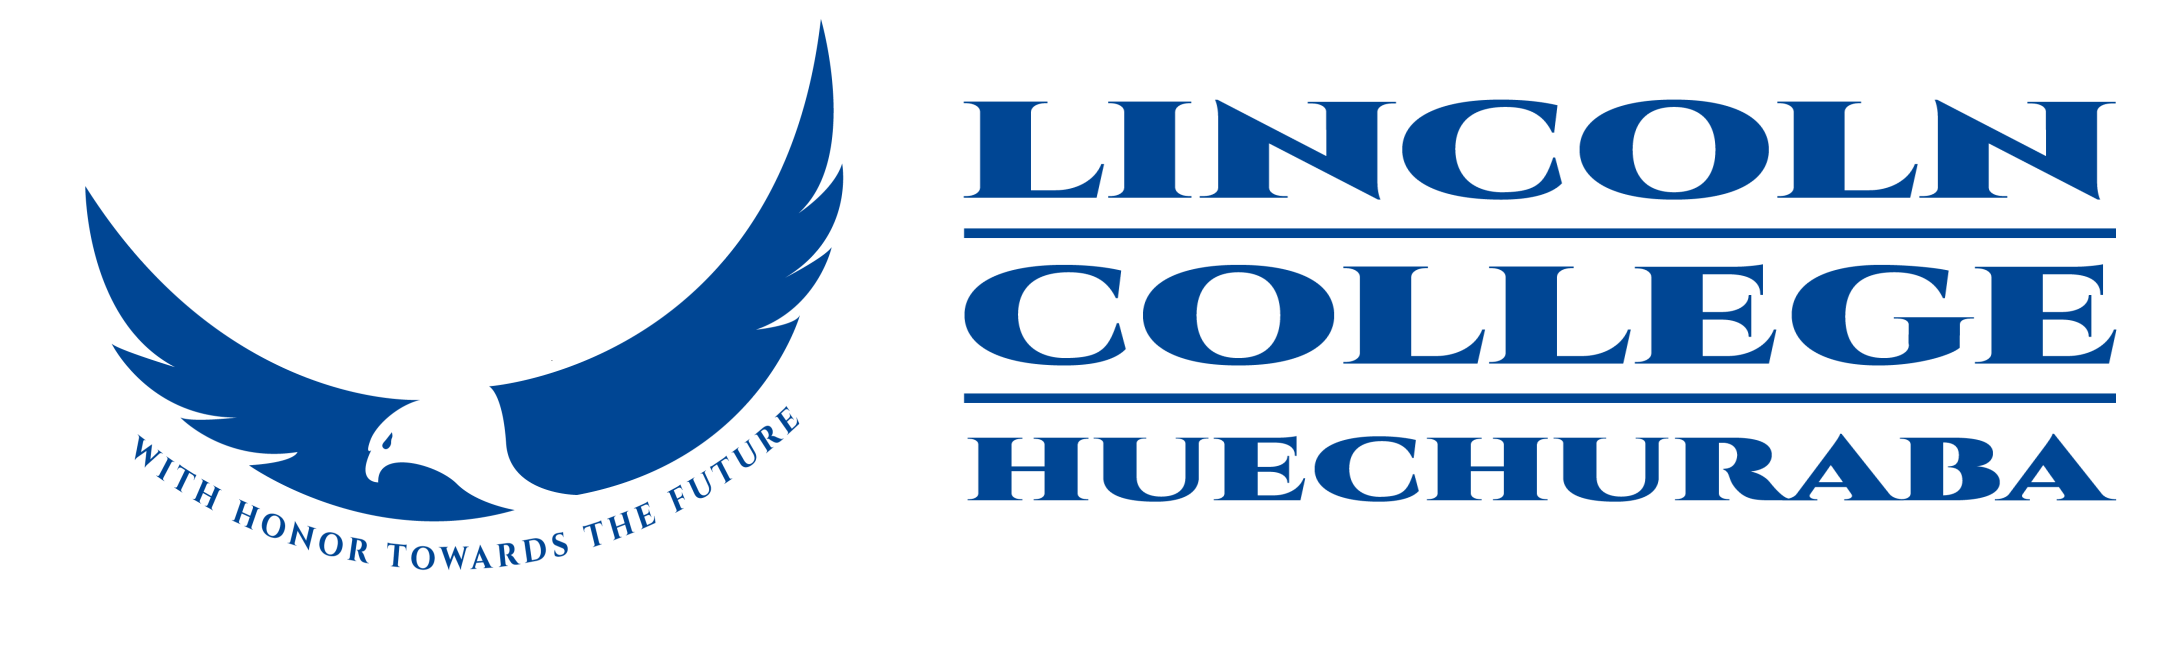 Lincoln College Huechuraba